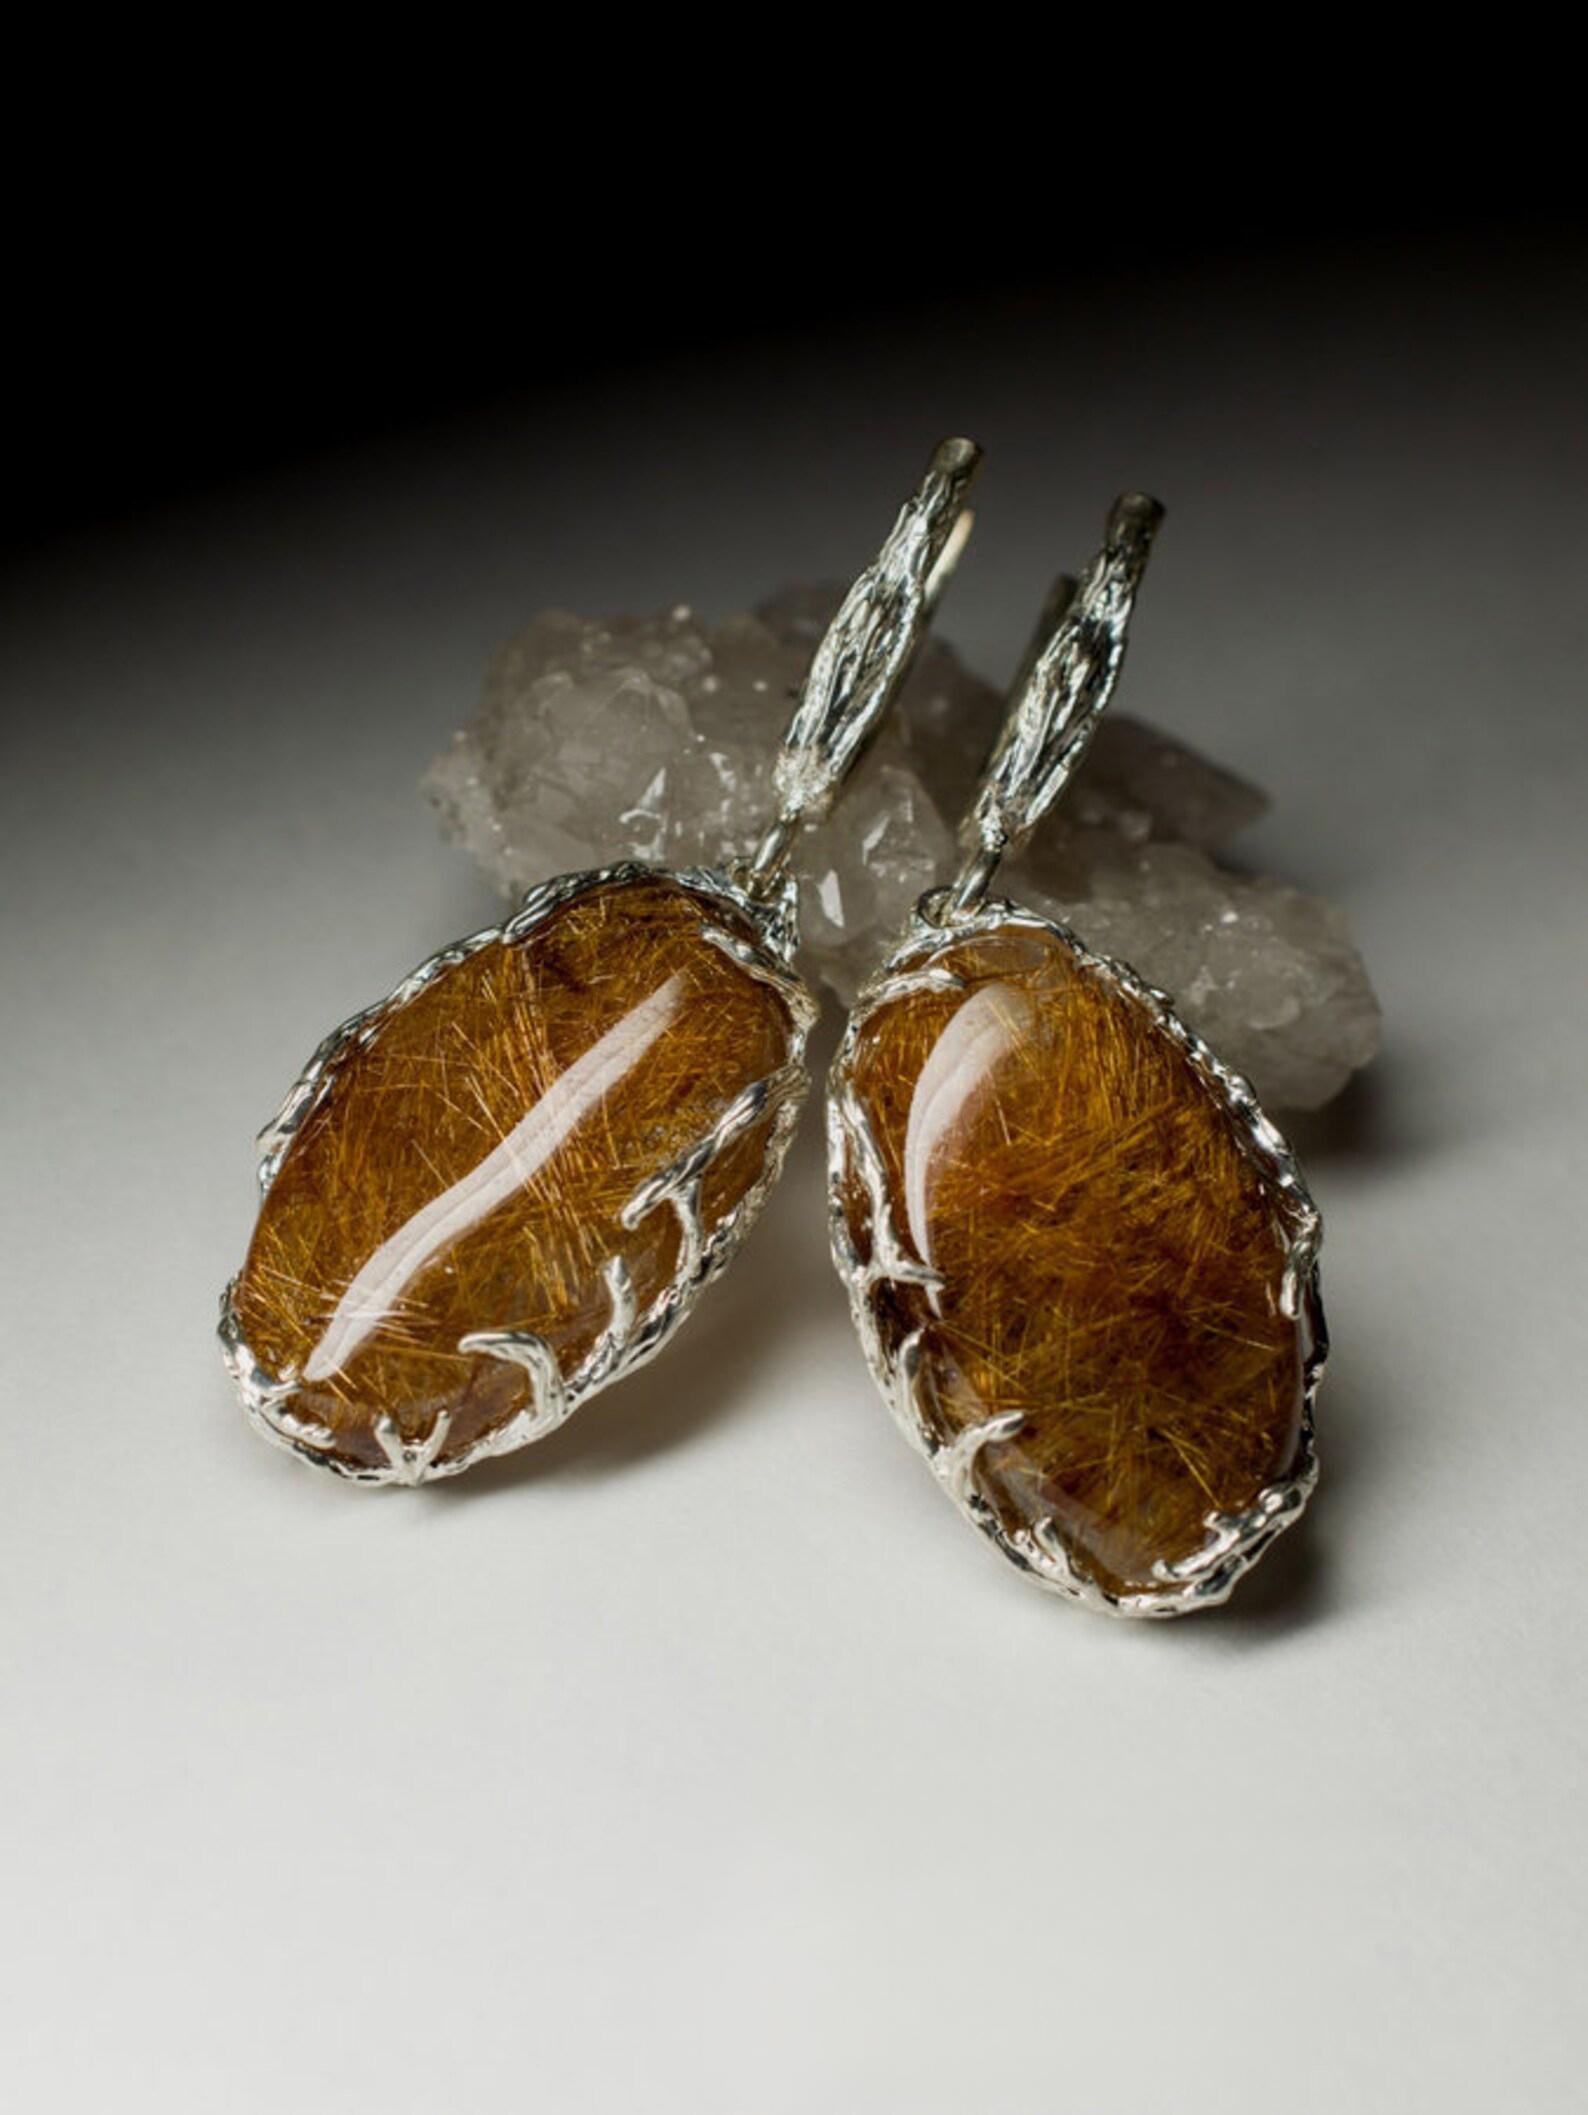 Long silver earrings with natural Rutilated Quartz
gemstone origin - Brazil
earrings weight - 17.3 grams
earrings length - 1.97 in / 50 mm
gem size is 0.28 x 0.63 x 1.18 in / 7 х 16 х 30 mm
stones weight - 43.62 carats